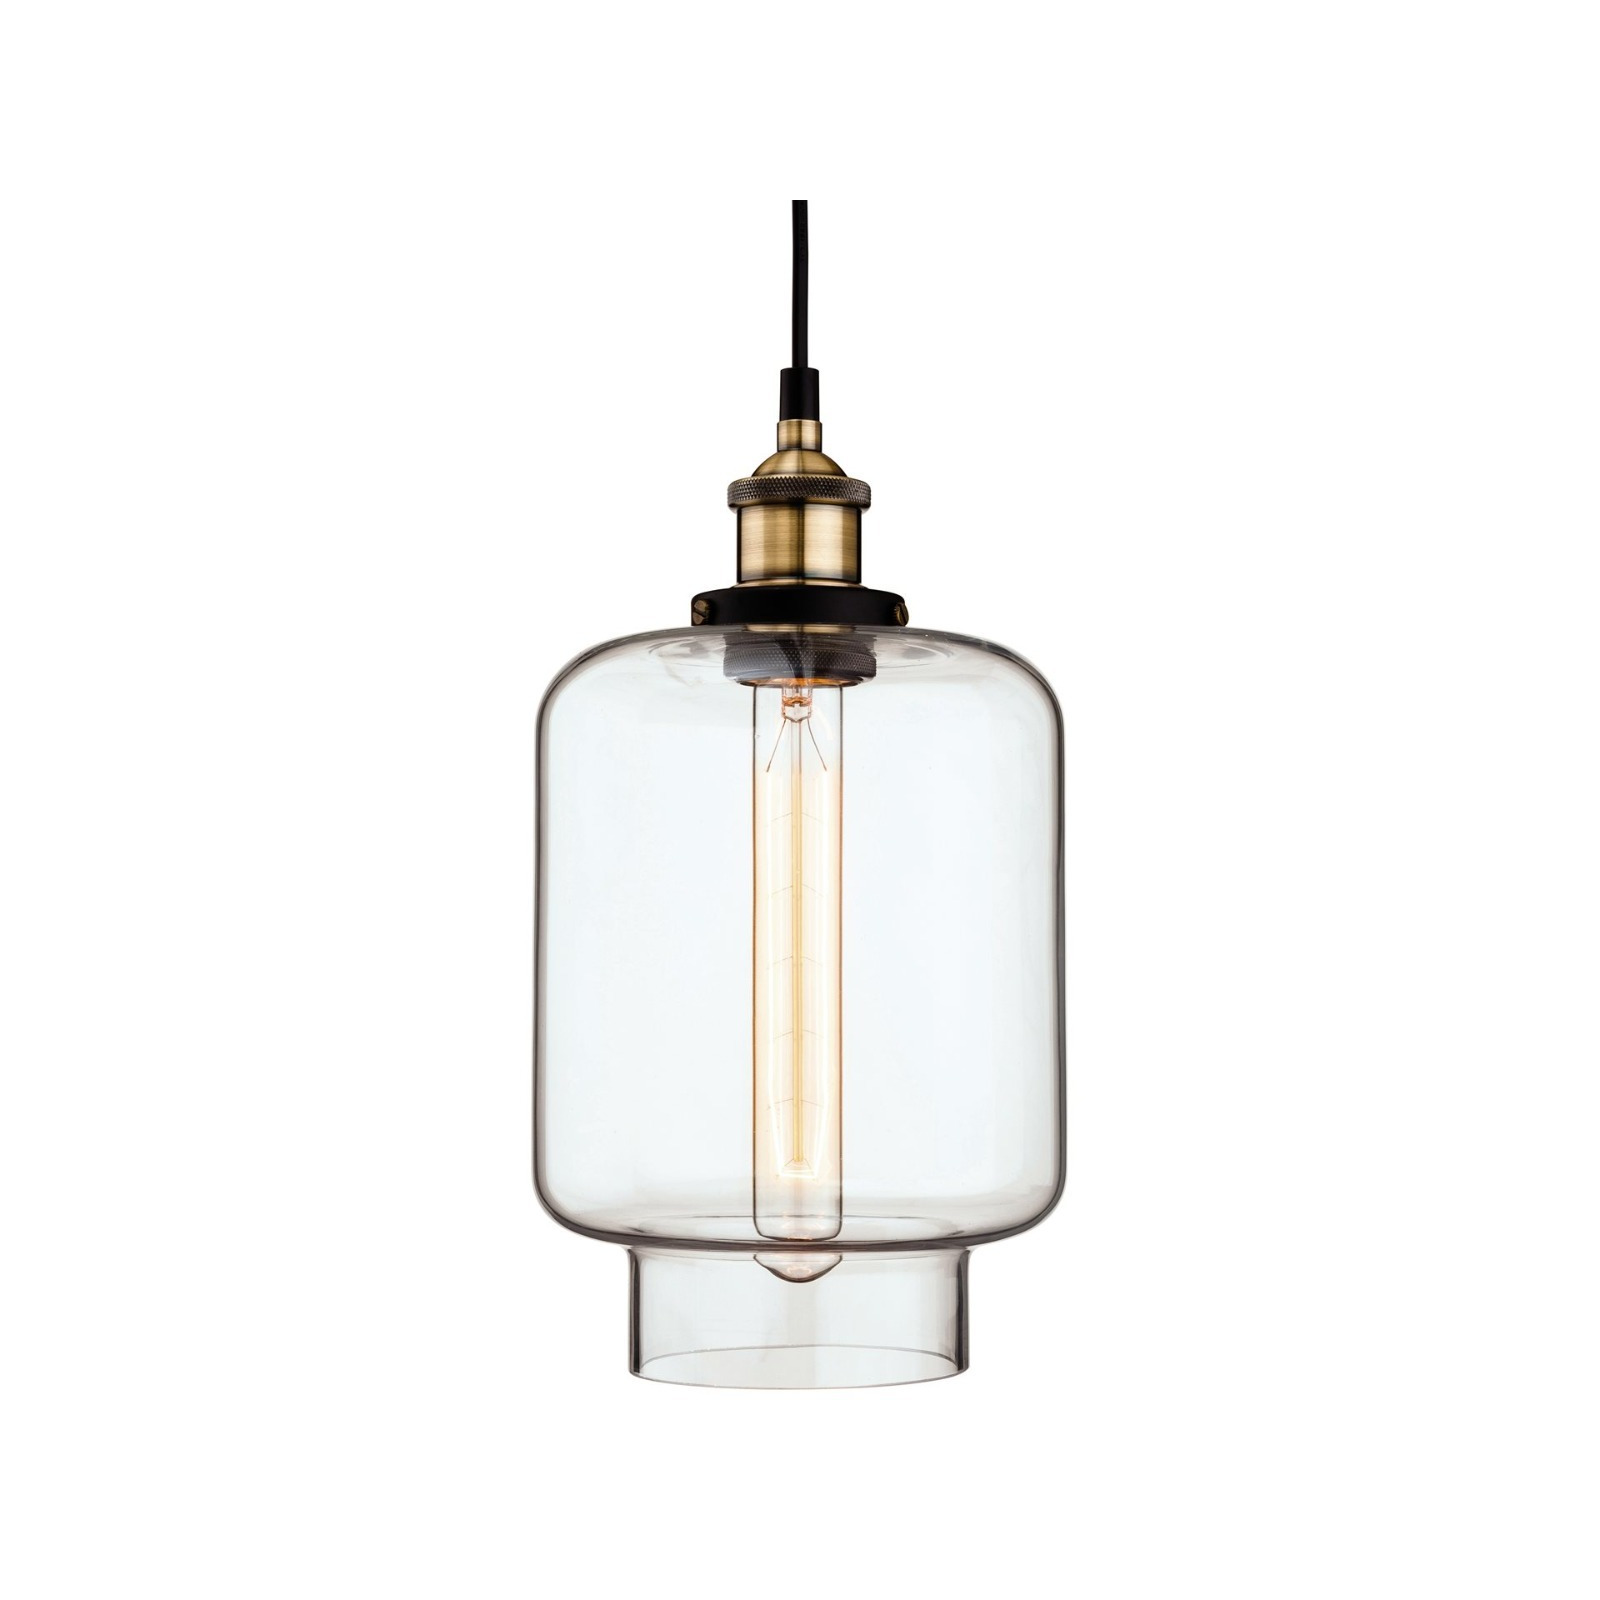 Firstlight Modern Vintage Style Glass Ceiling Pendant Light Shade - 3474AB